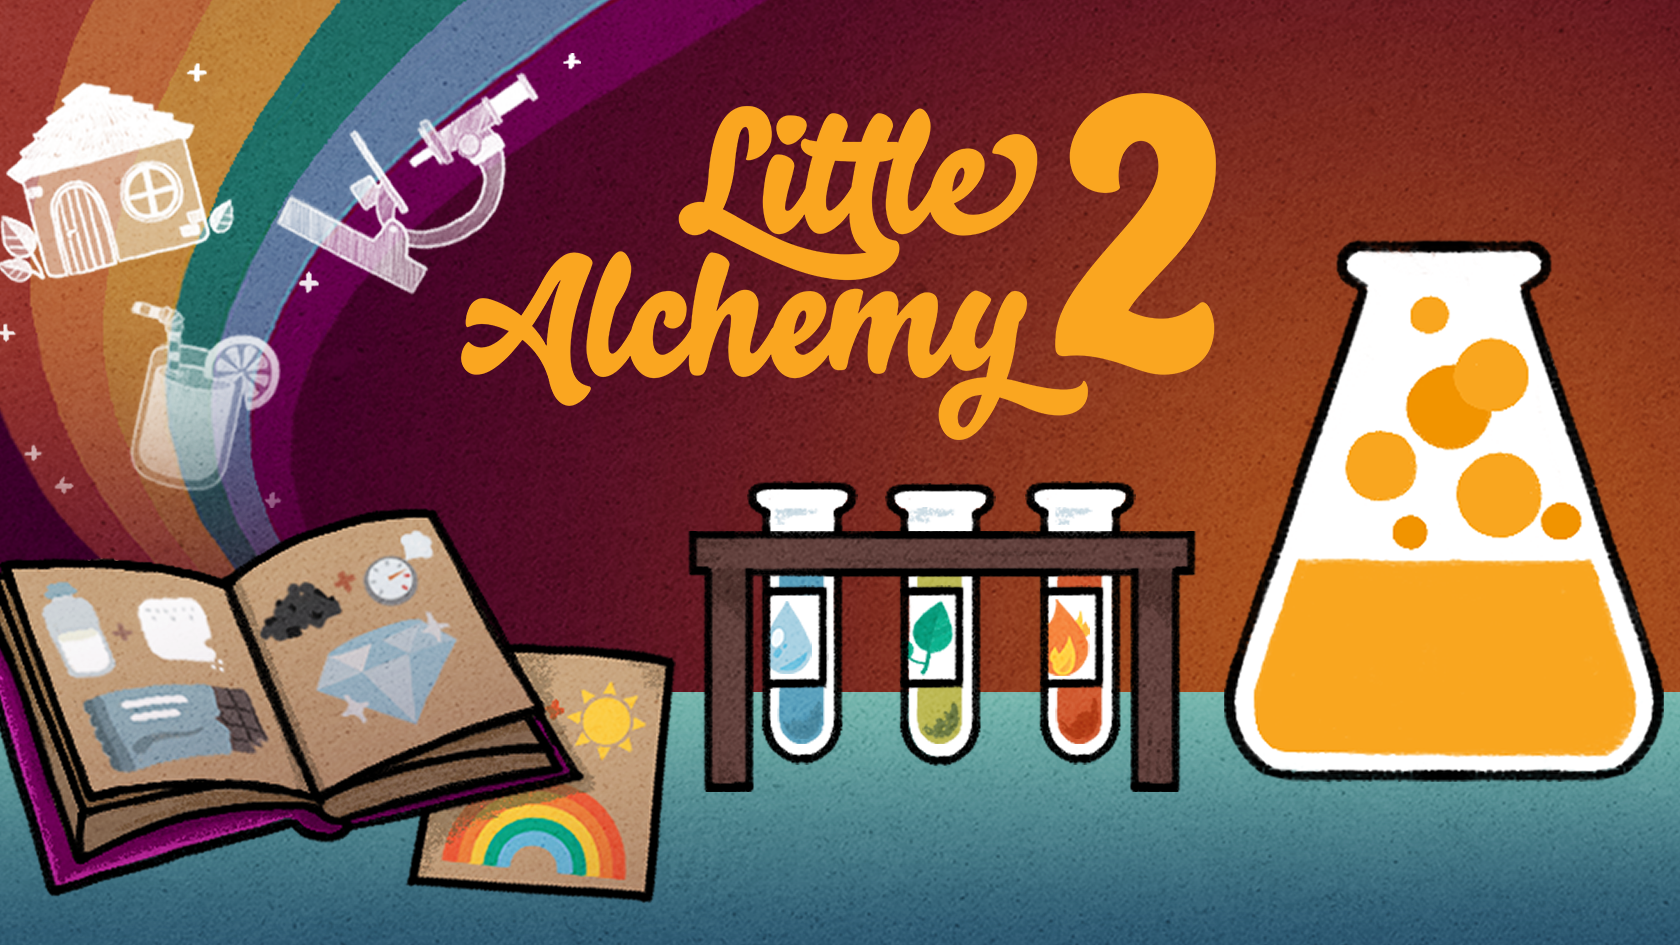 Little Alchemy For Alexa